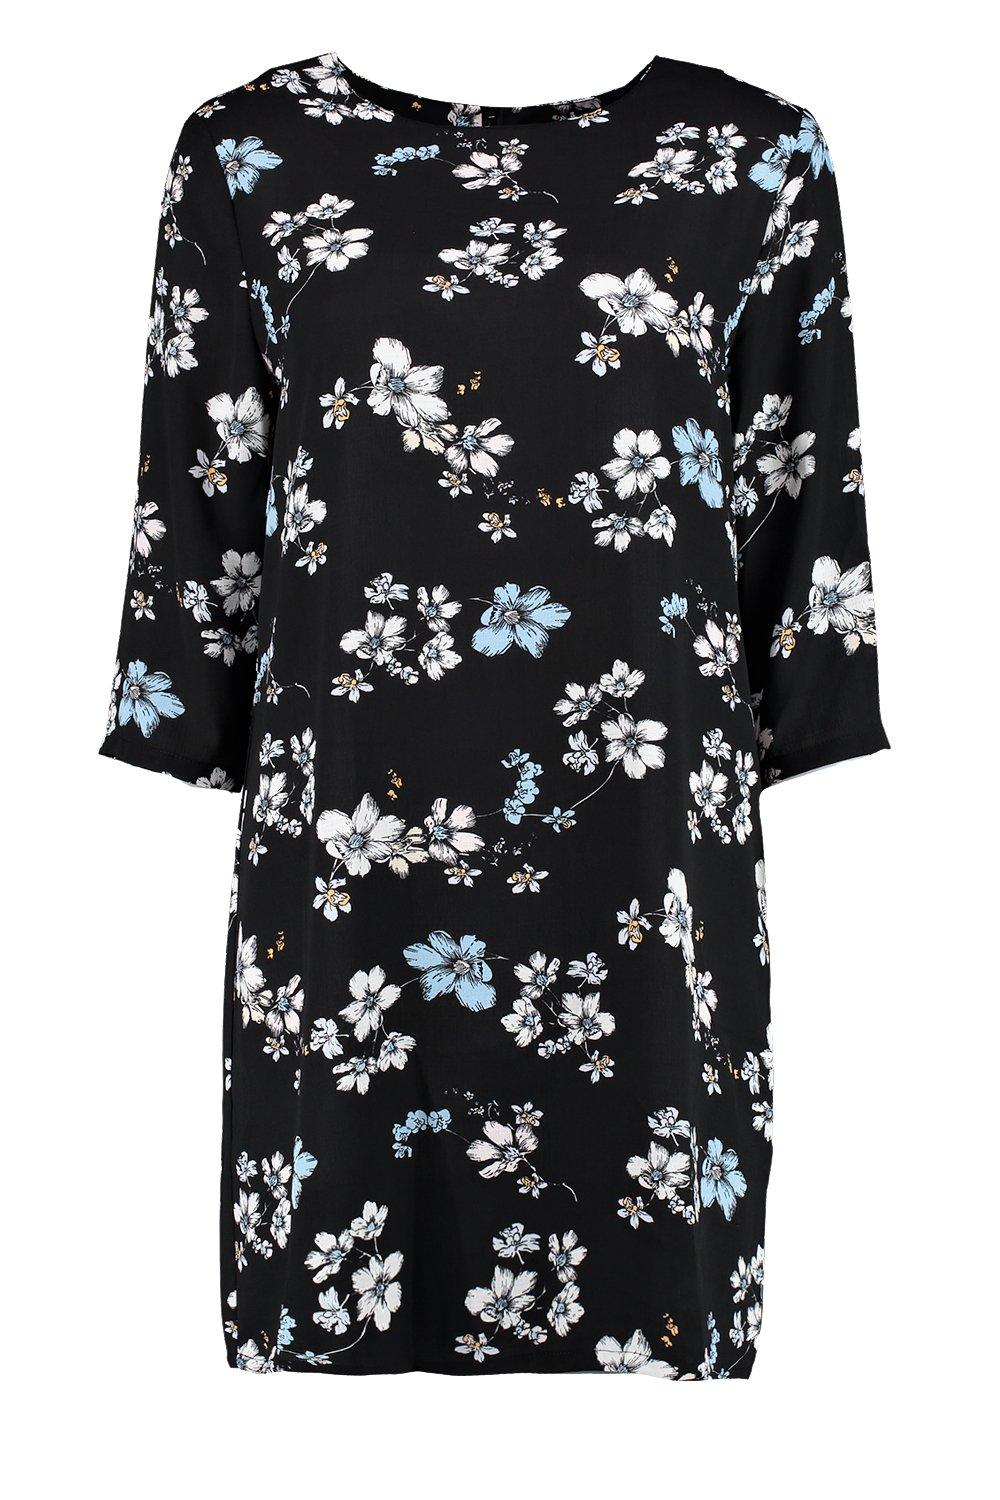 Boohoo Womens Lucia Floral Print 3/4 Sleeve Shift Dress | eBay